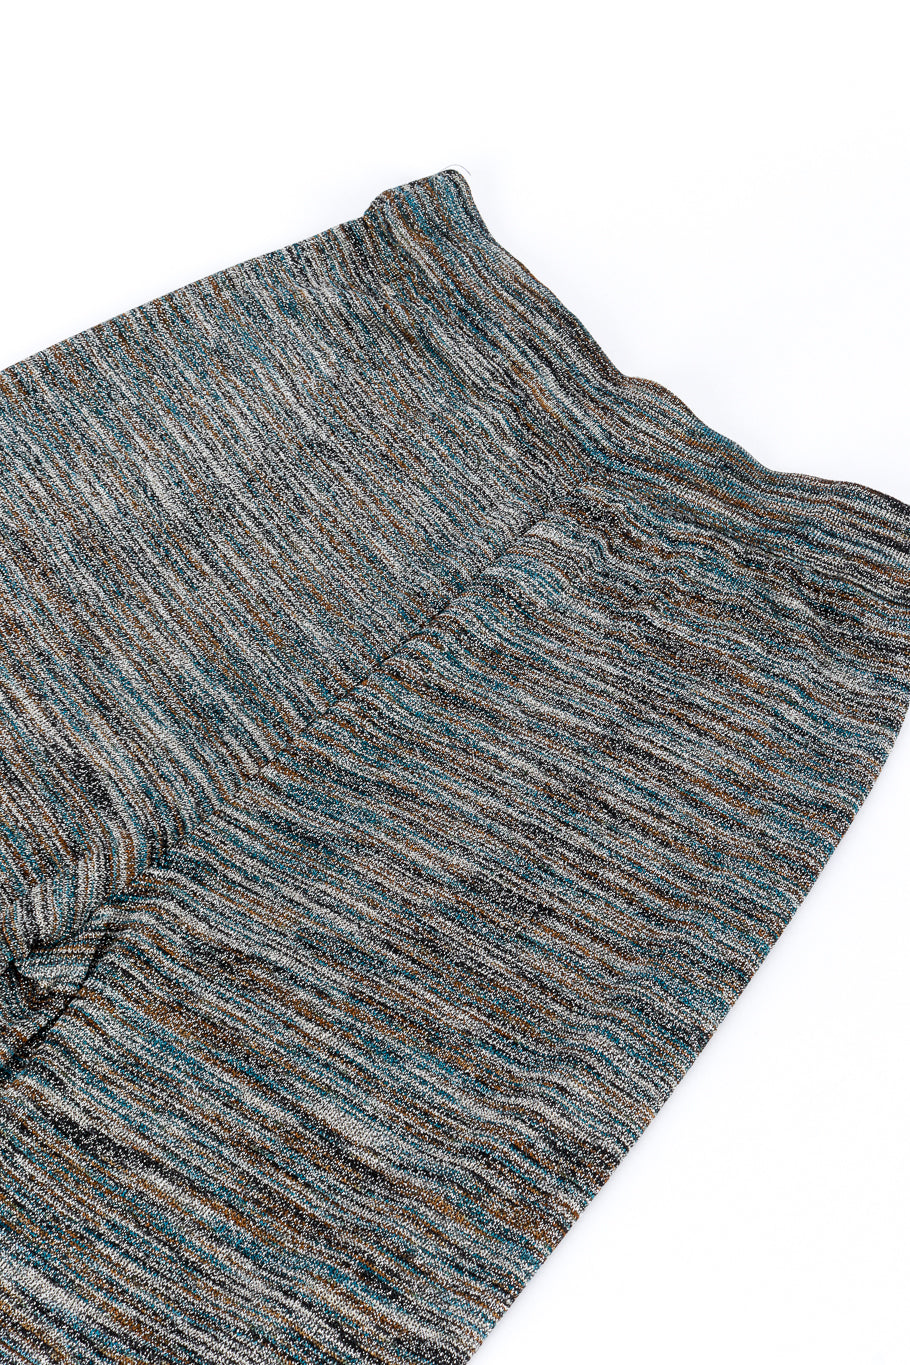 Striped Crop Top & Trouser Set trouser detail @RECESS LA